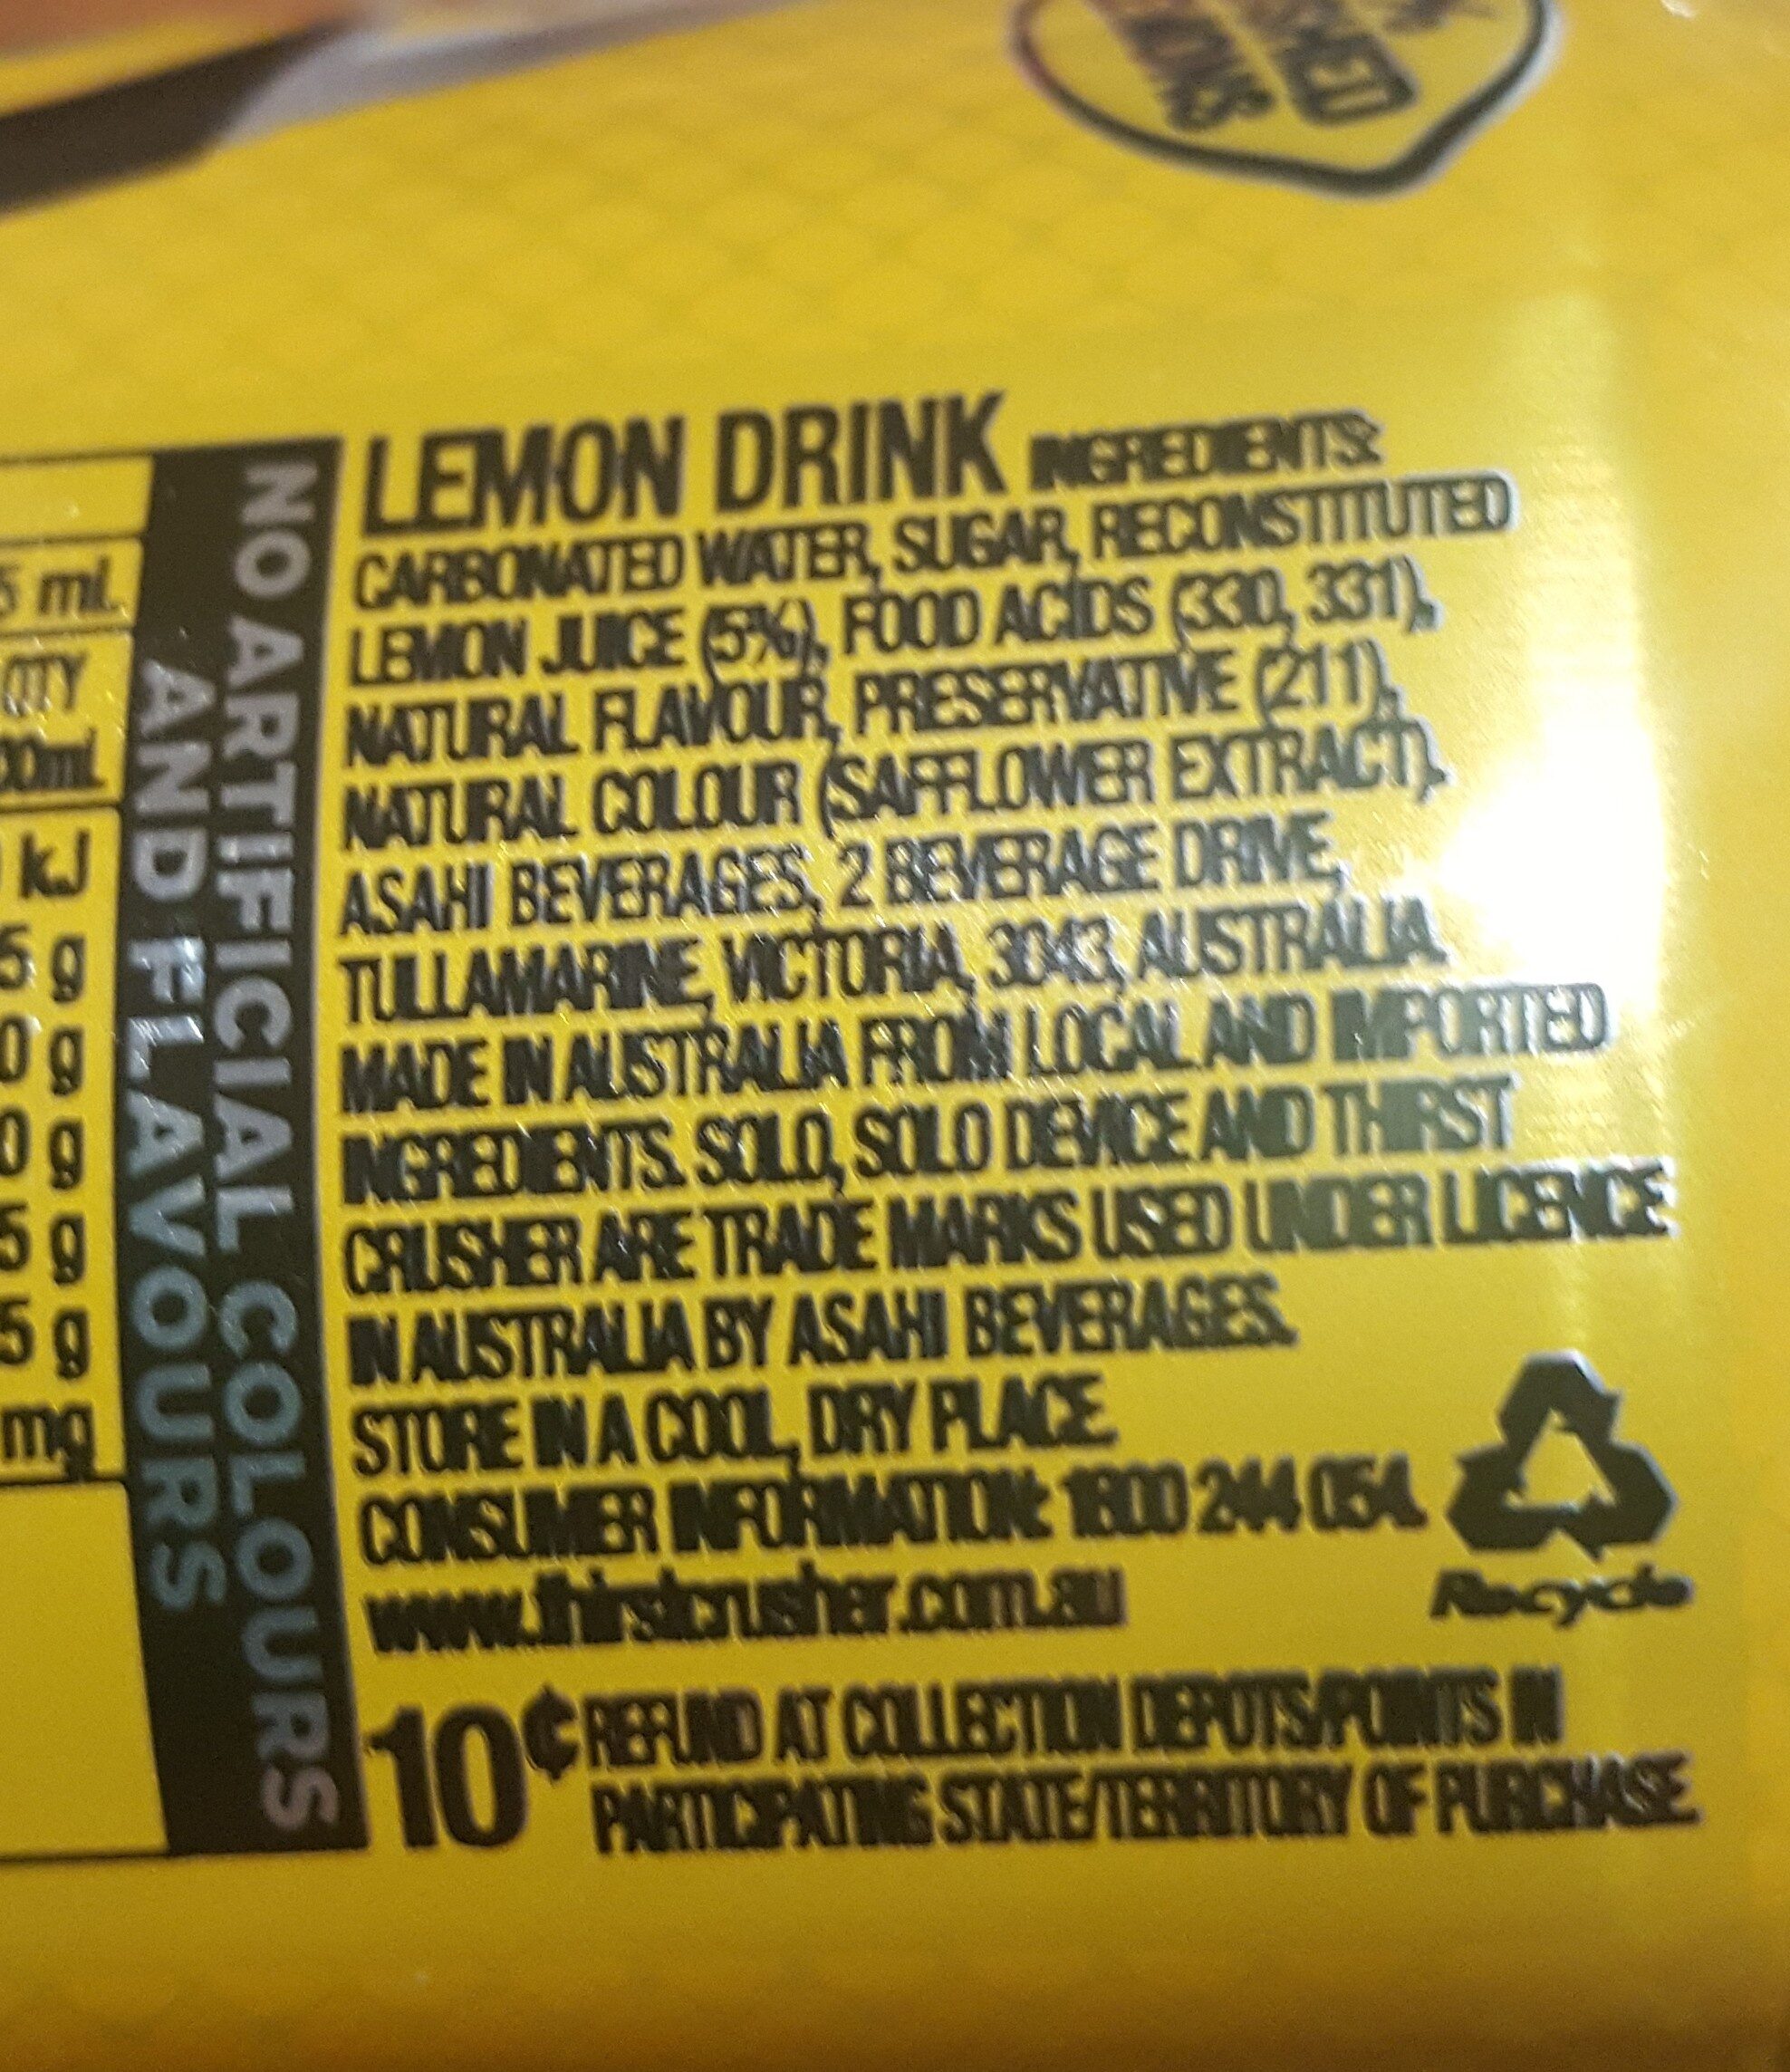 Solo Original Lemon - Ingredients